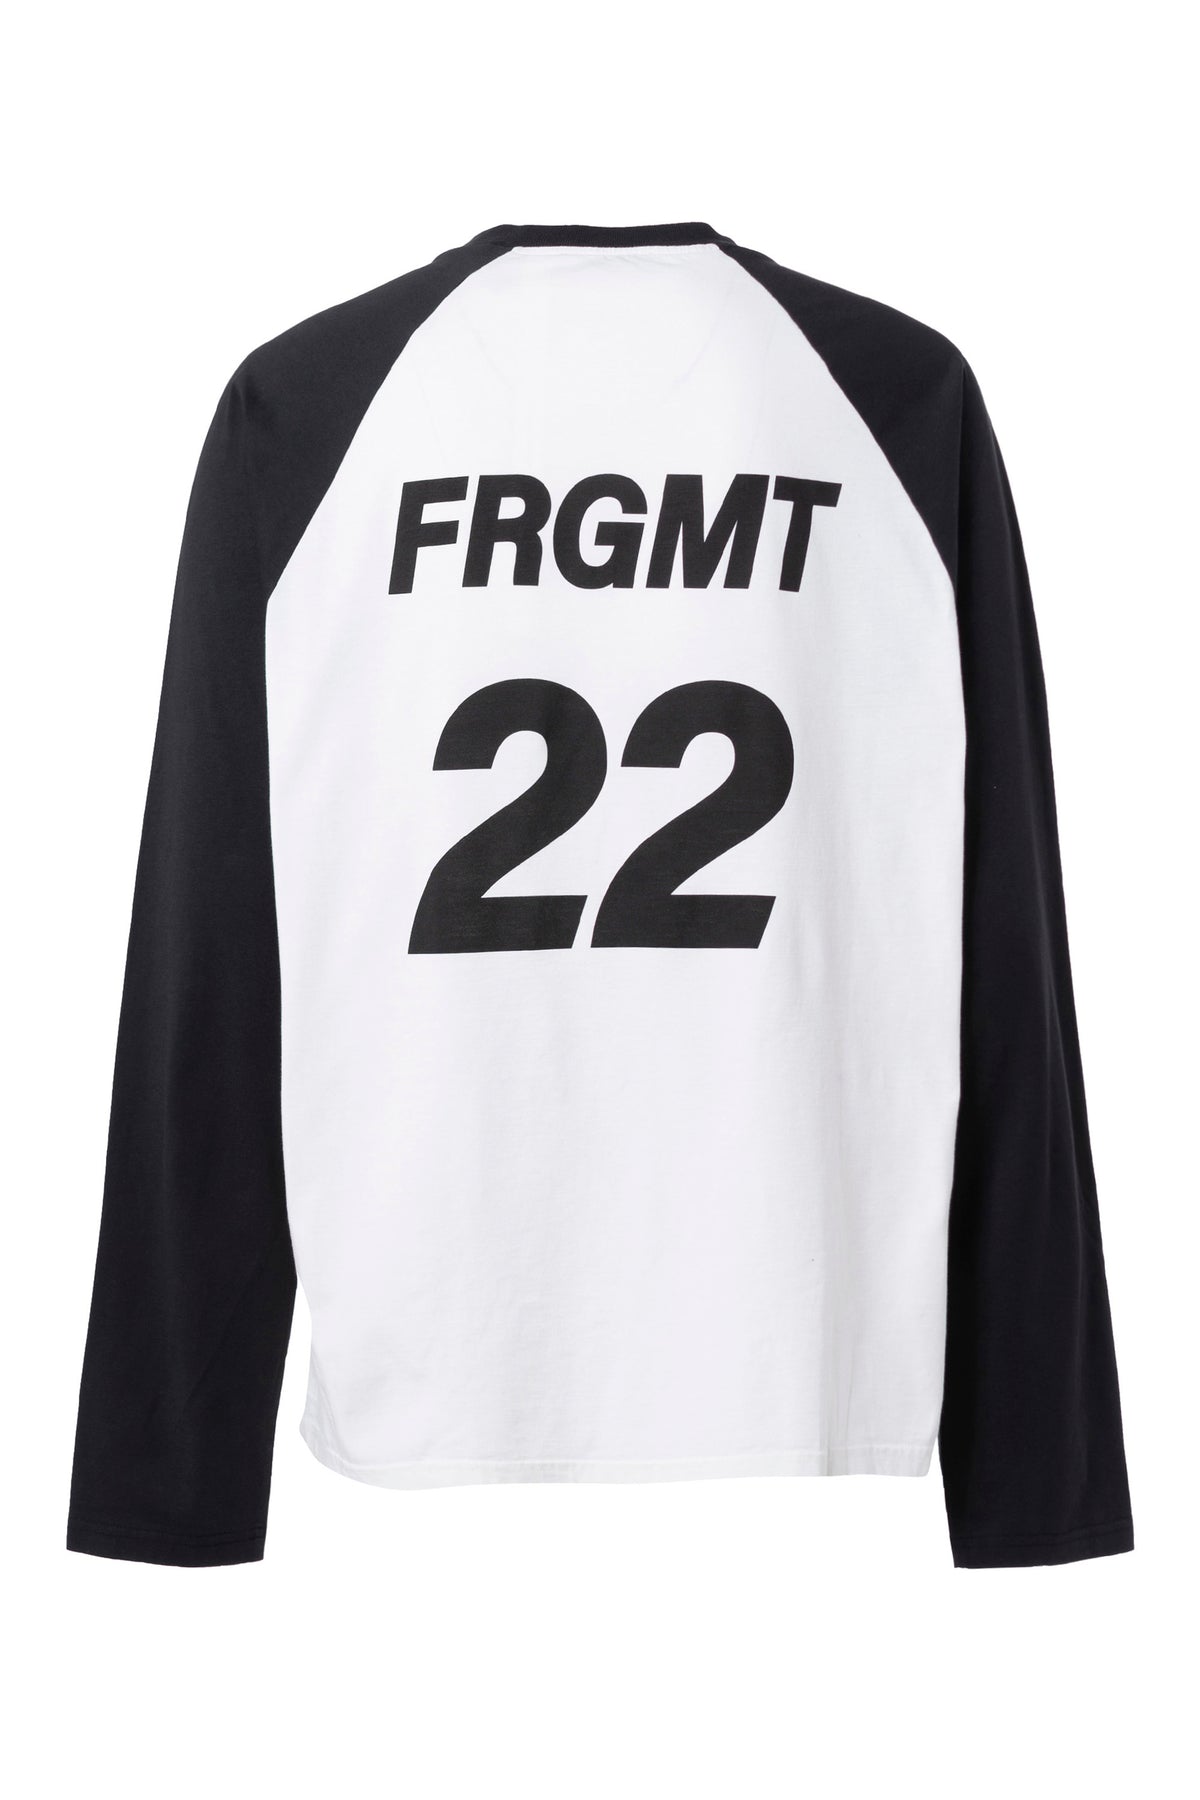 7 MONCLER FRGMT HIROSHI FUJIWARA Tシャツ